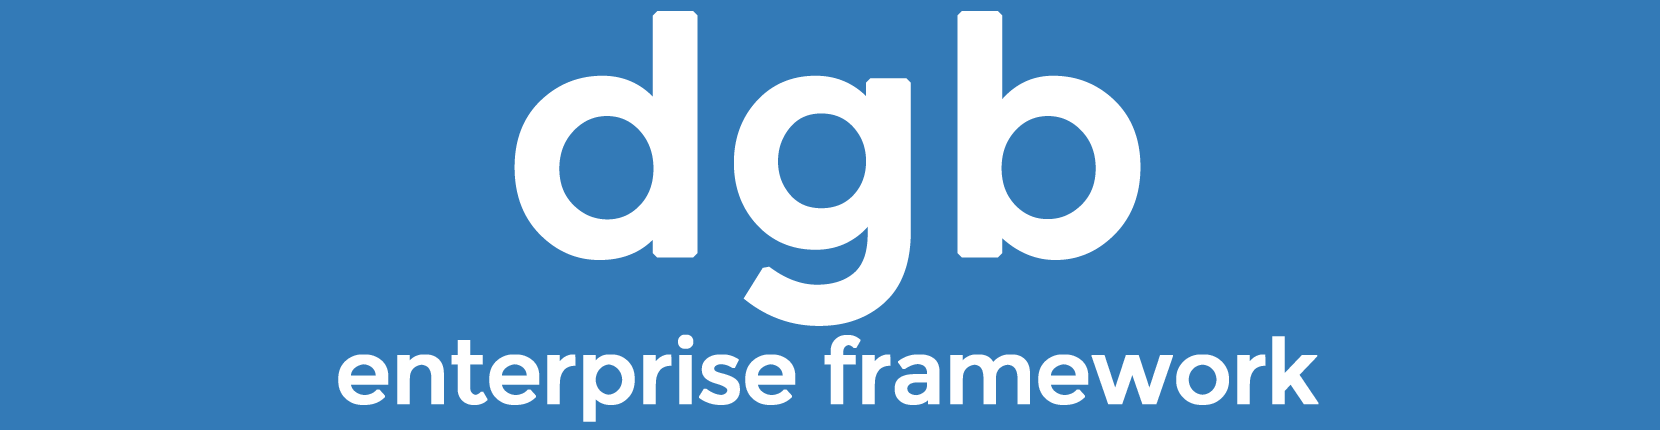 Lodo di Dogobit Enterprise Framework